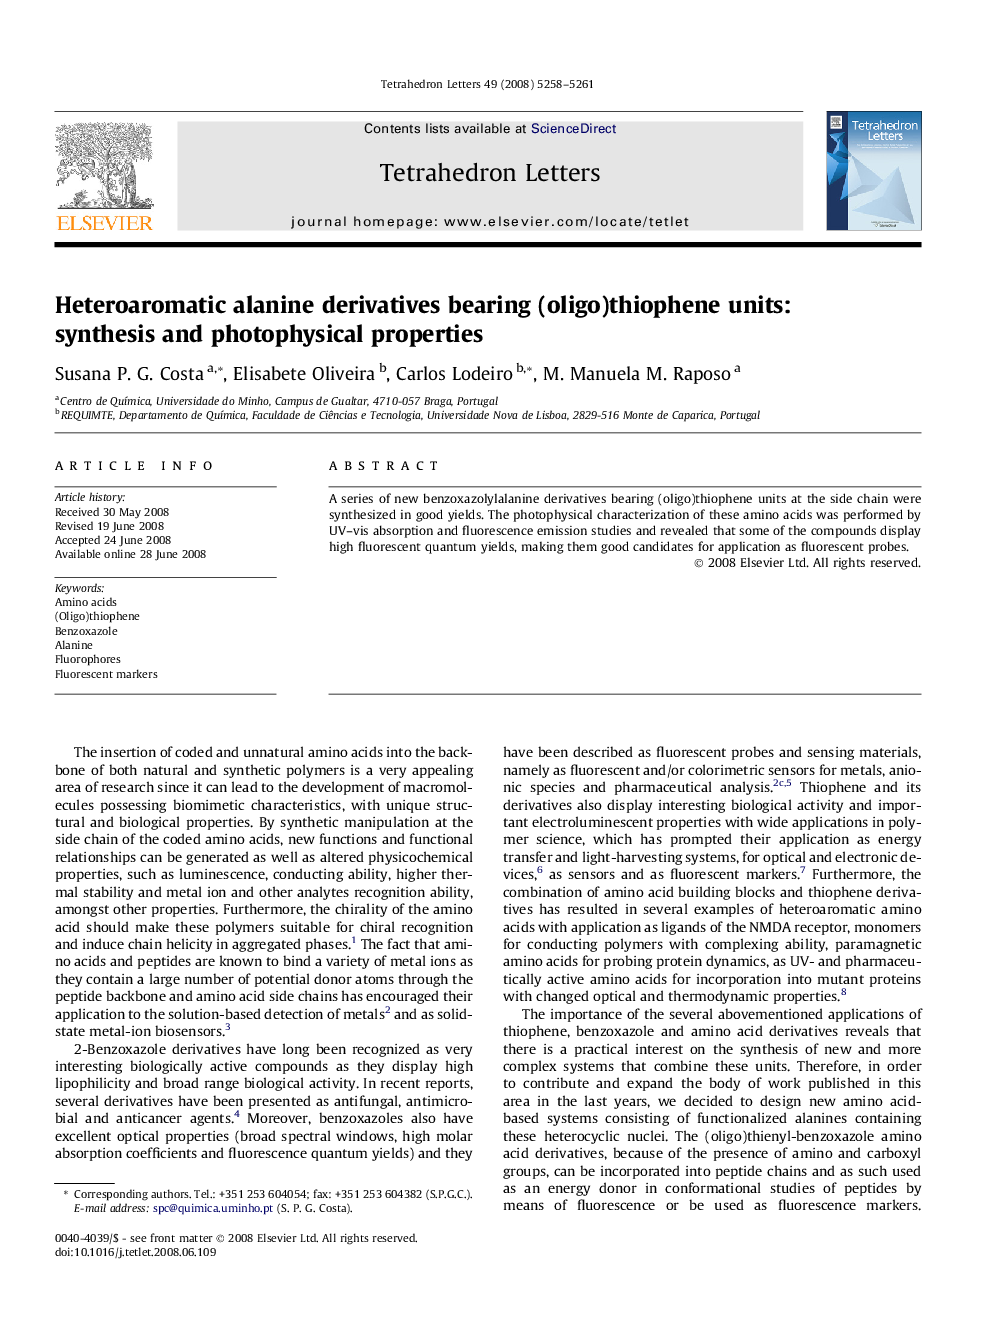 Heteroaromatic alanine derivatives bearing (oligo)thiophene units: synthesis and photophysical properties